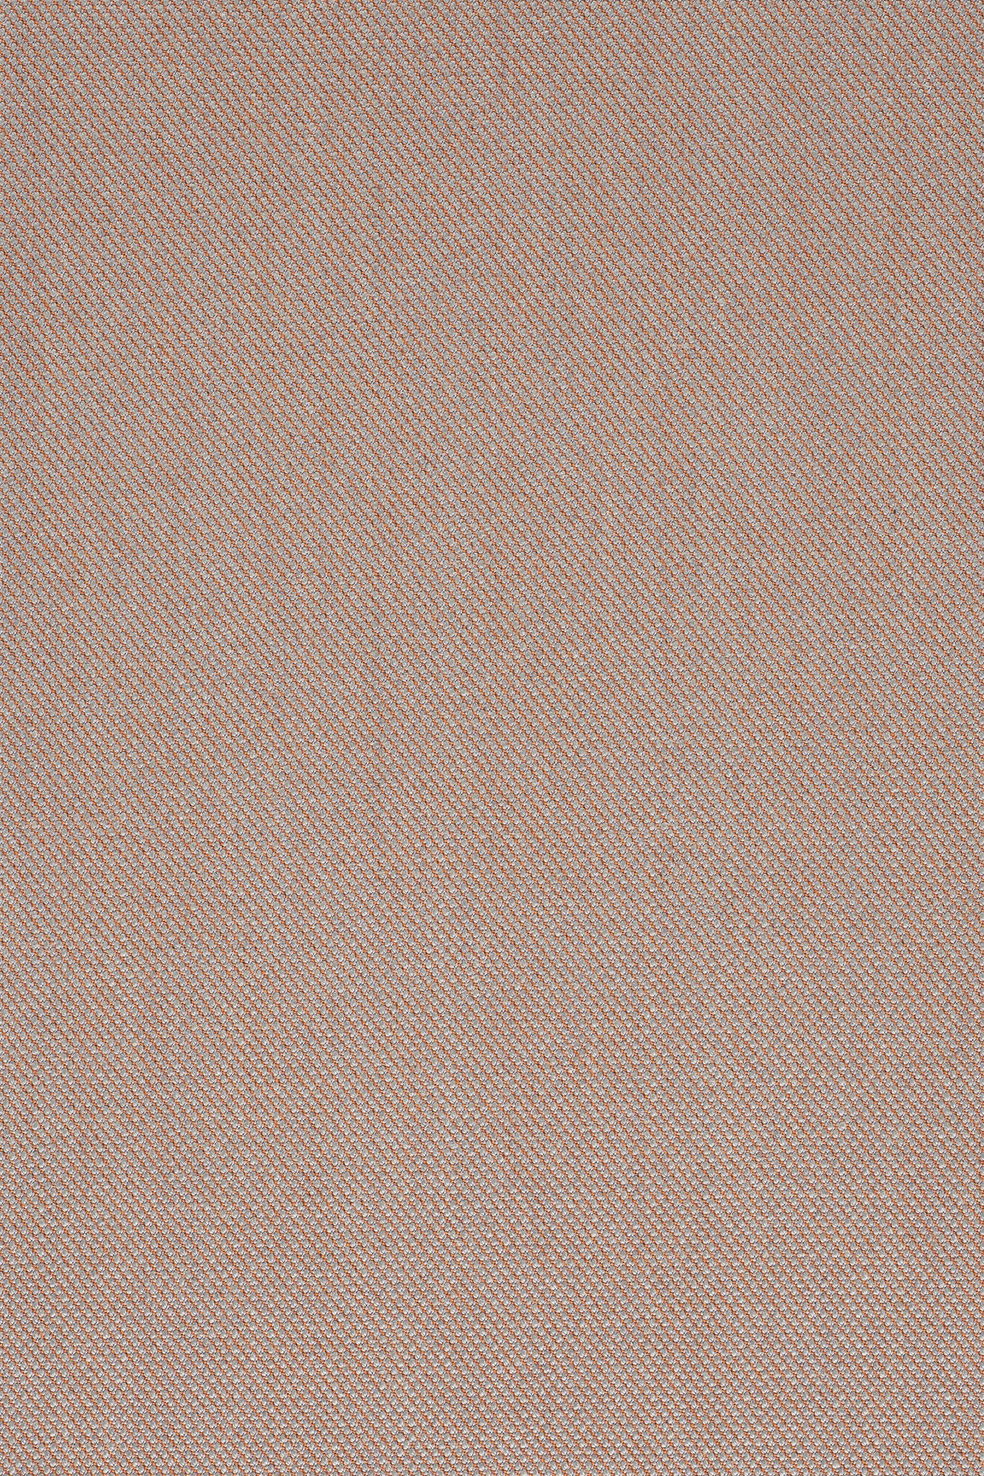 Fabric sample Steelcut Trio 3 426 pink